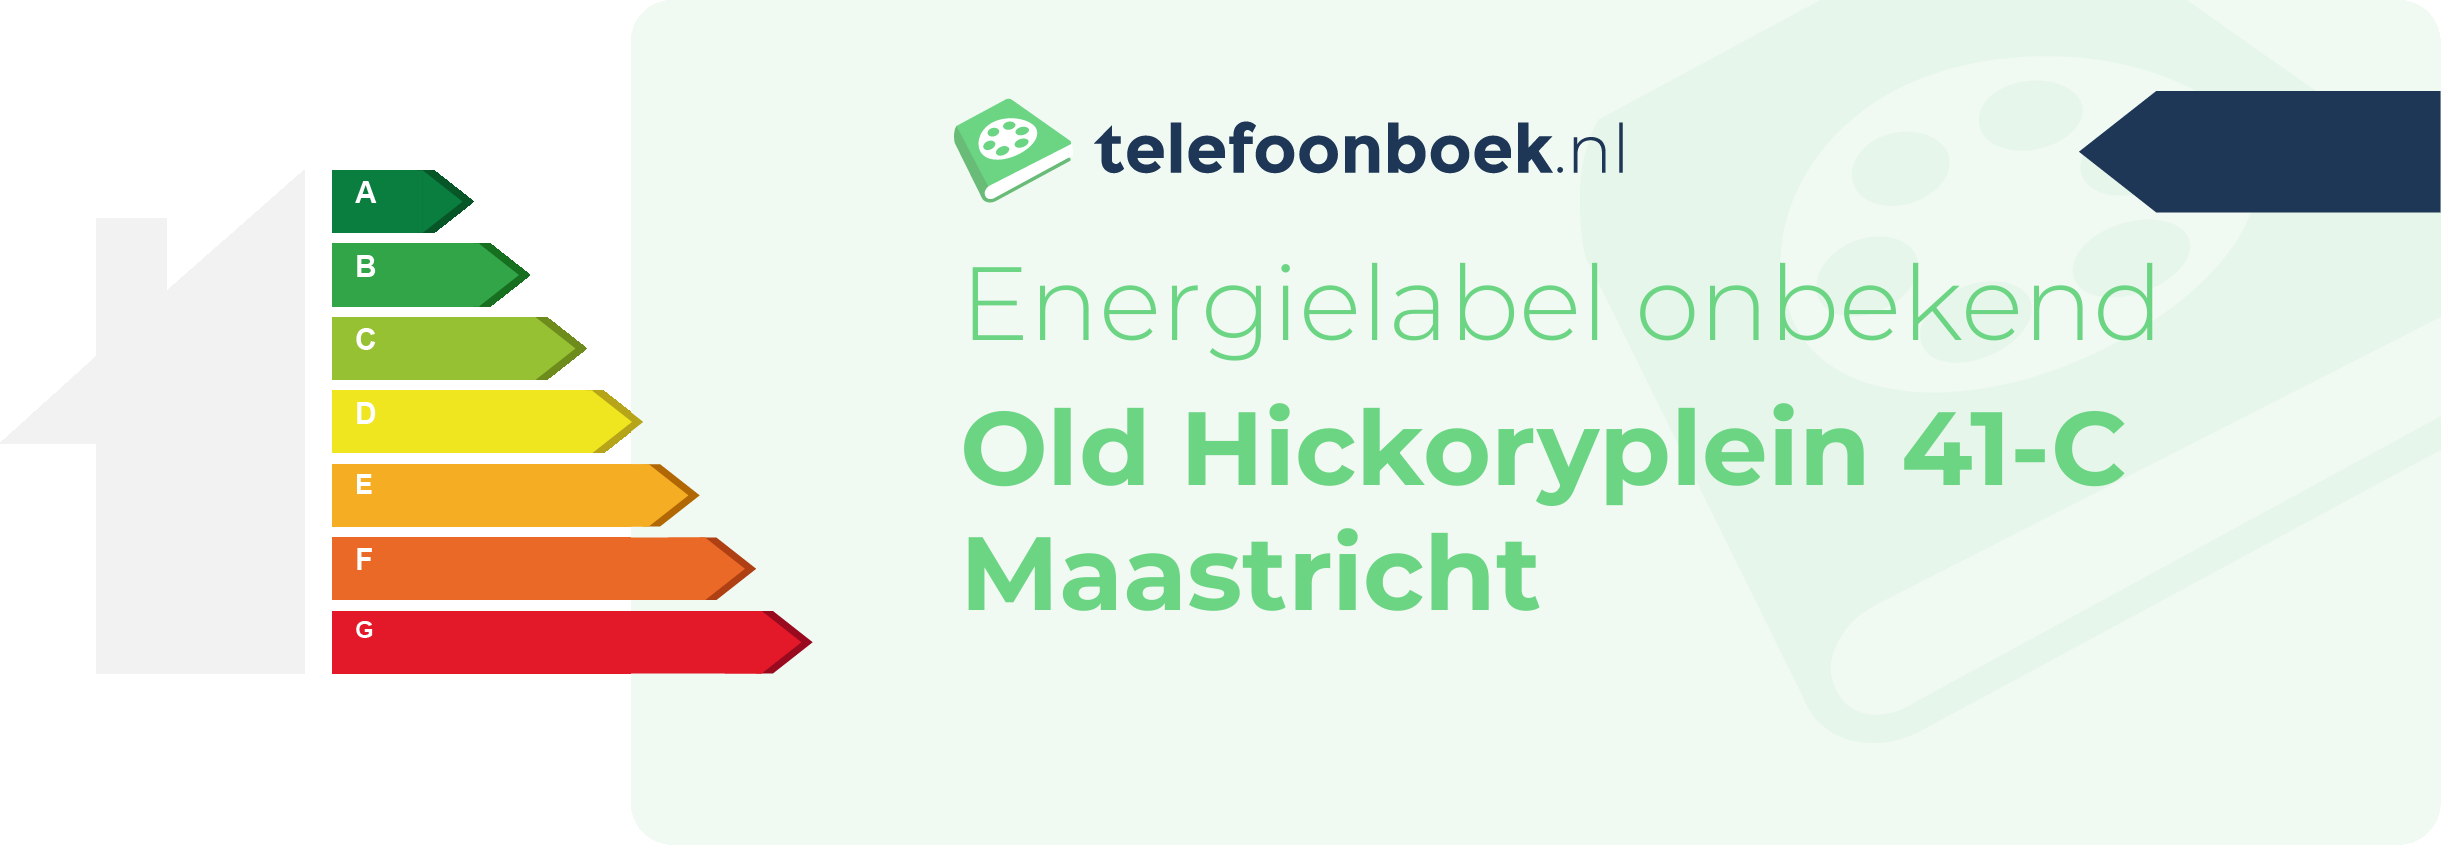 Energielabel Old Hickoryplein 41-C Maastricht